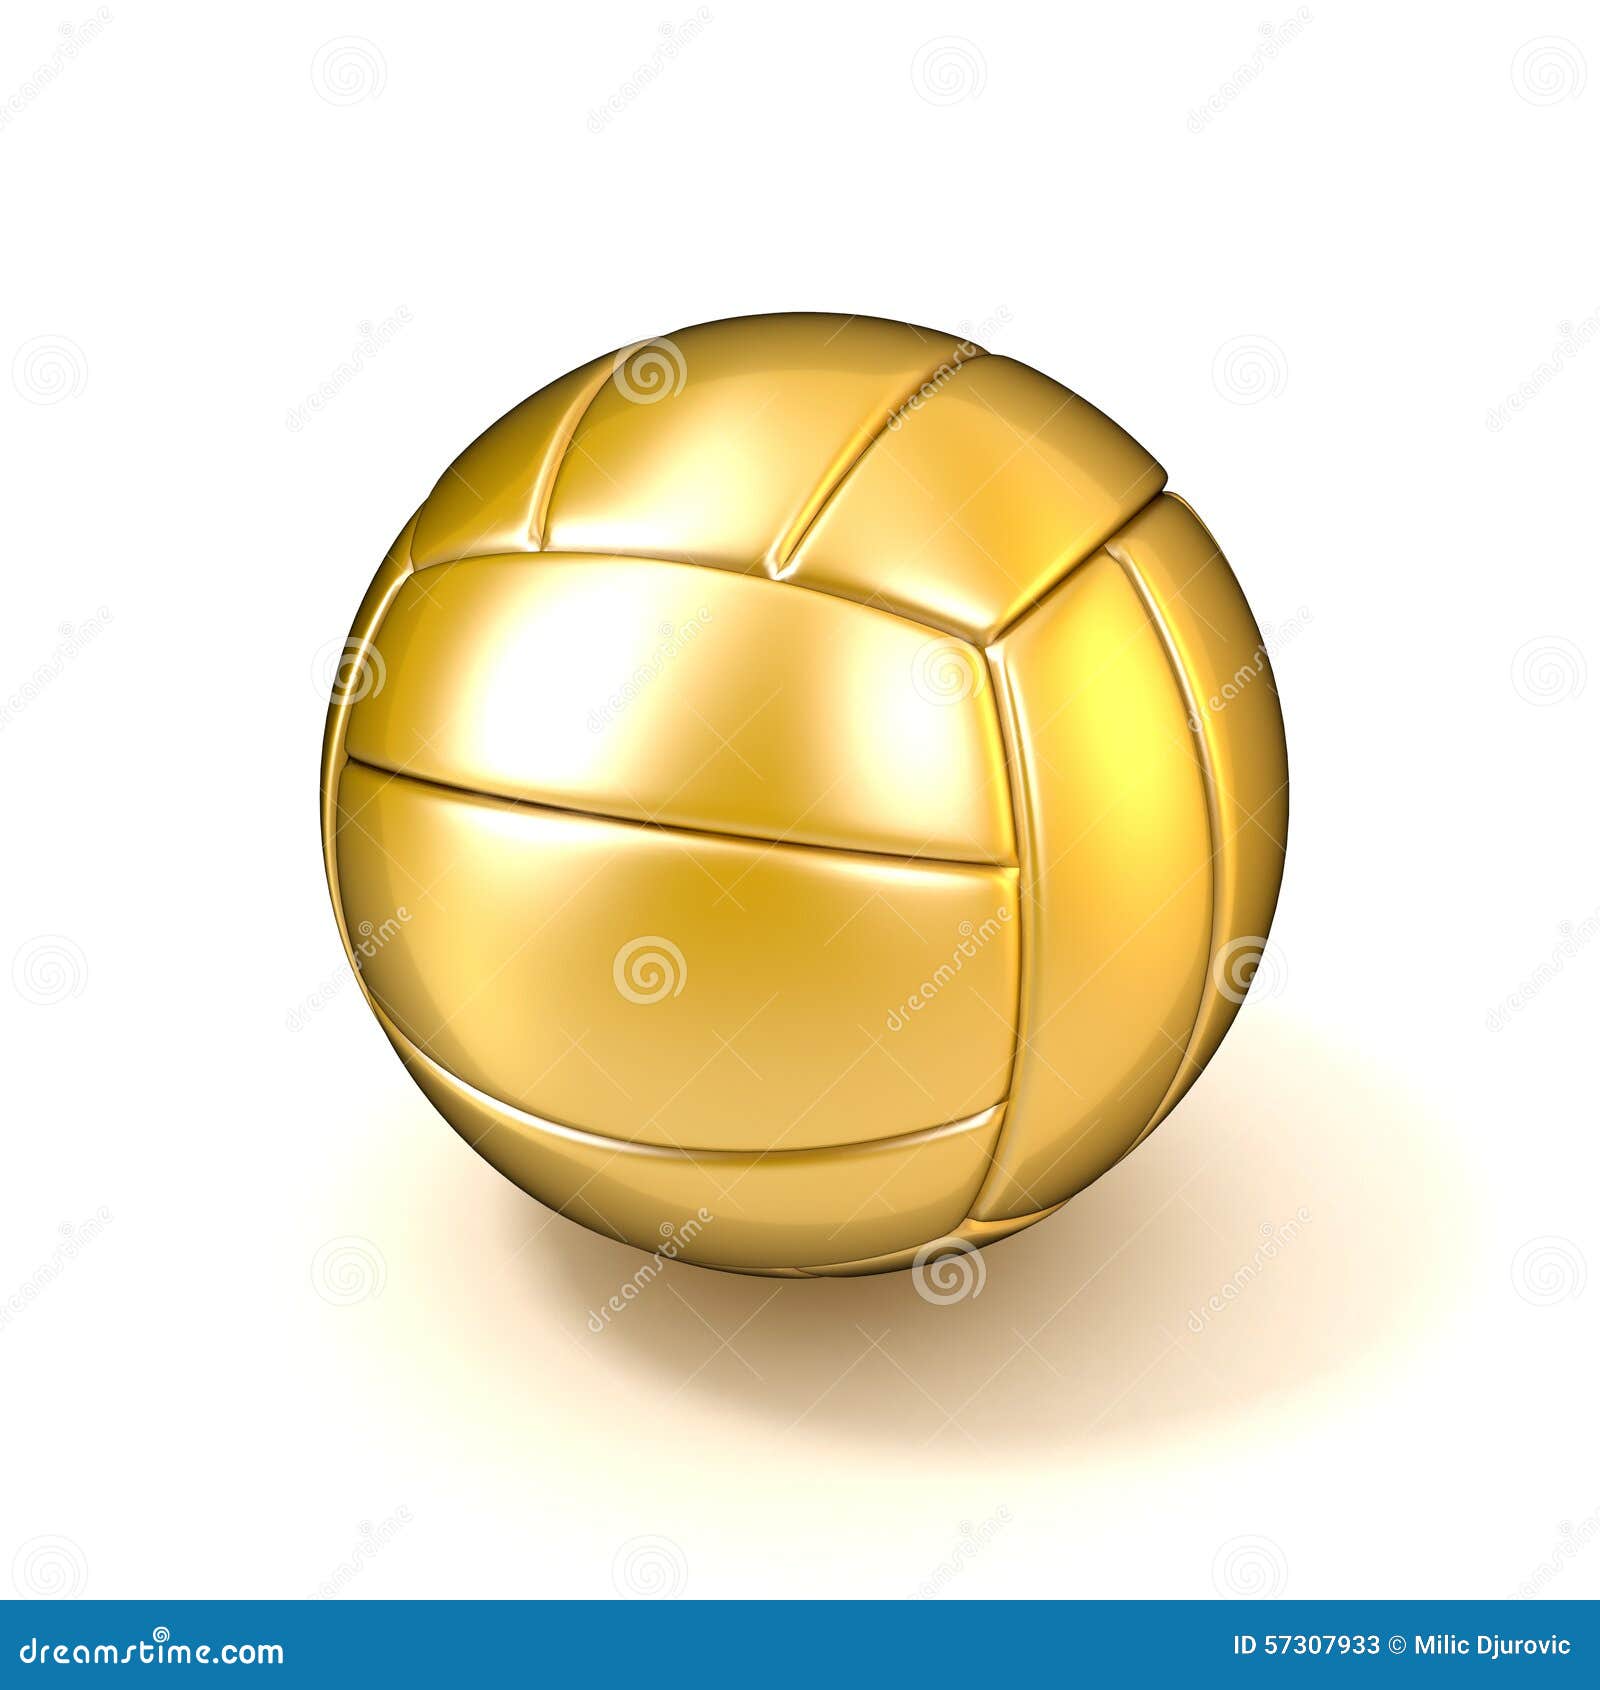 Golden volleyball ball stock illustration. Illustration of classic ...